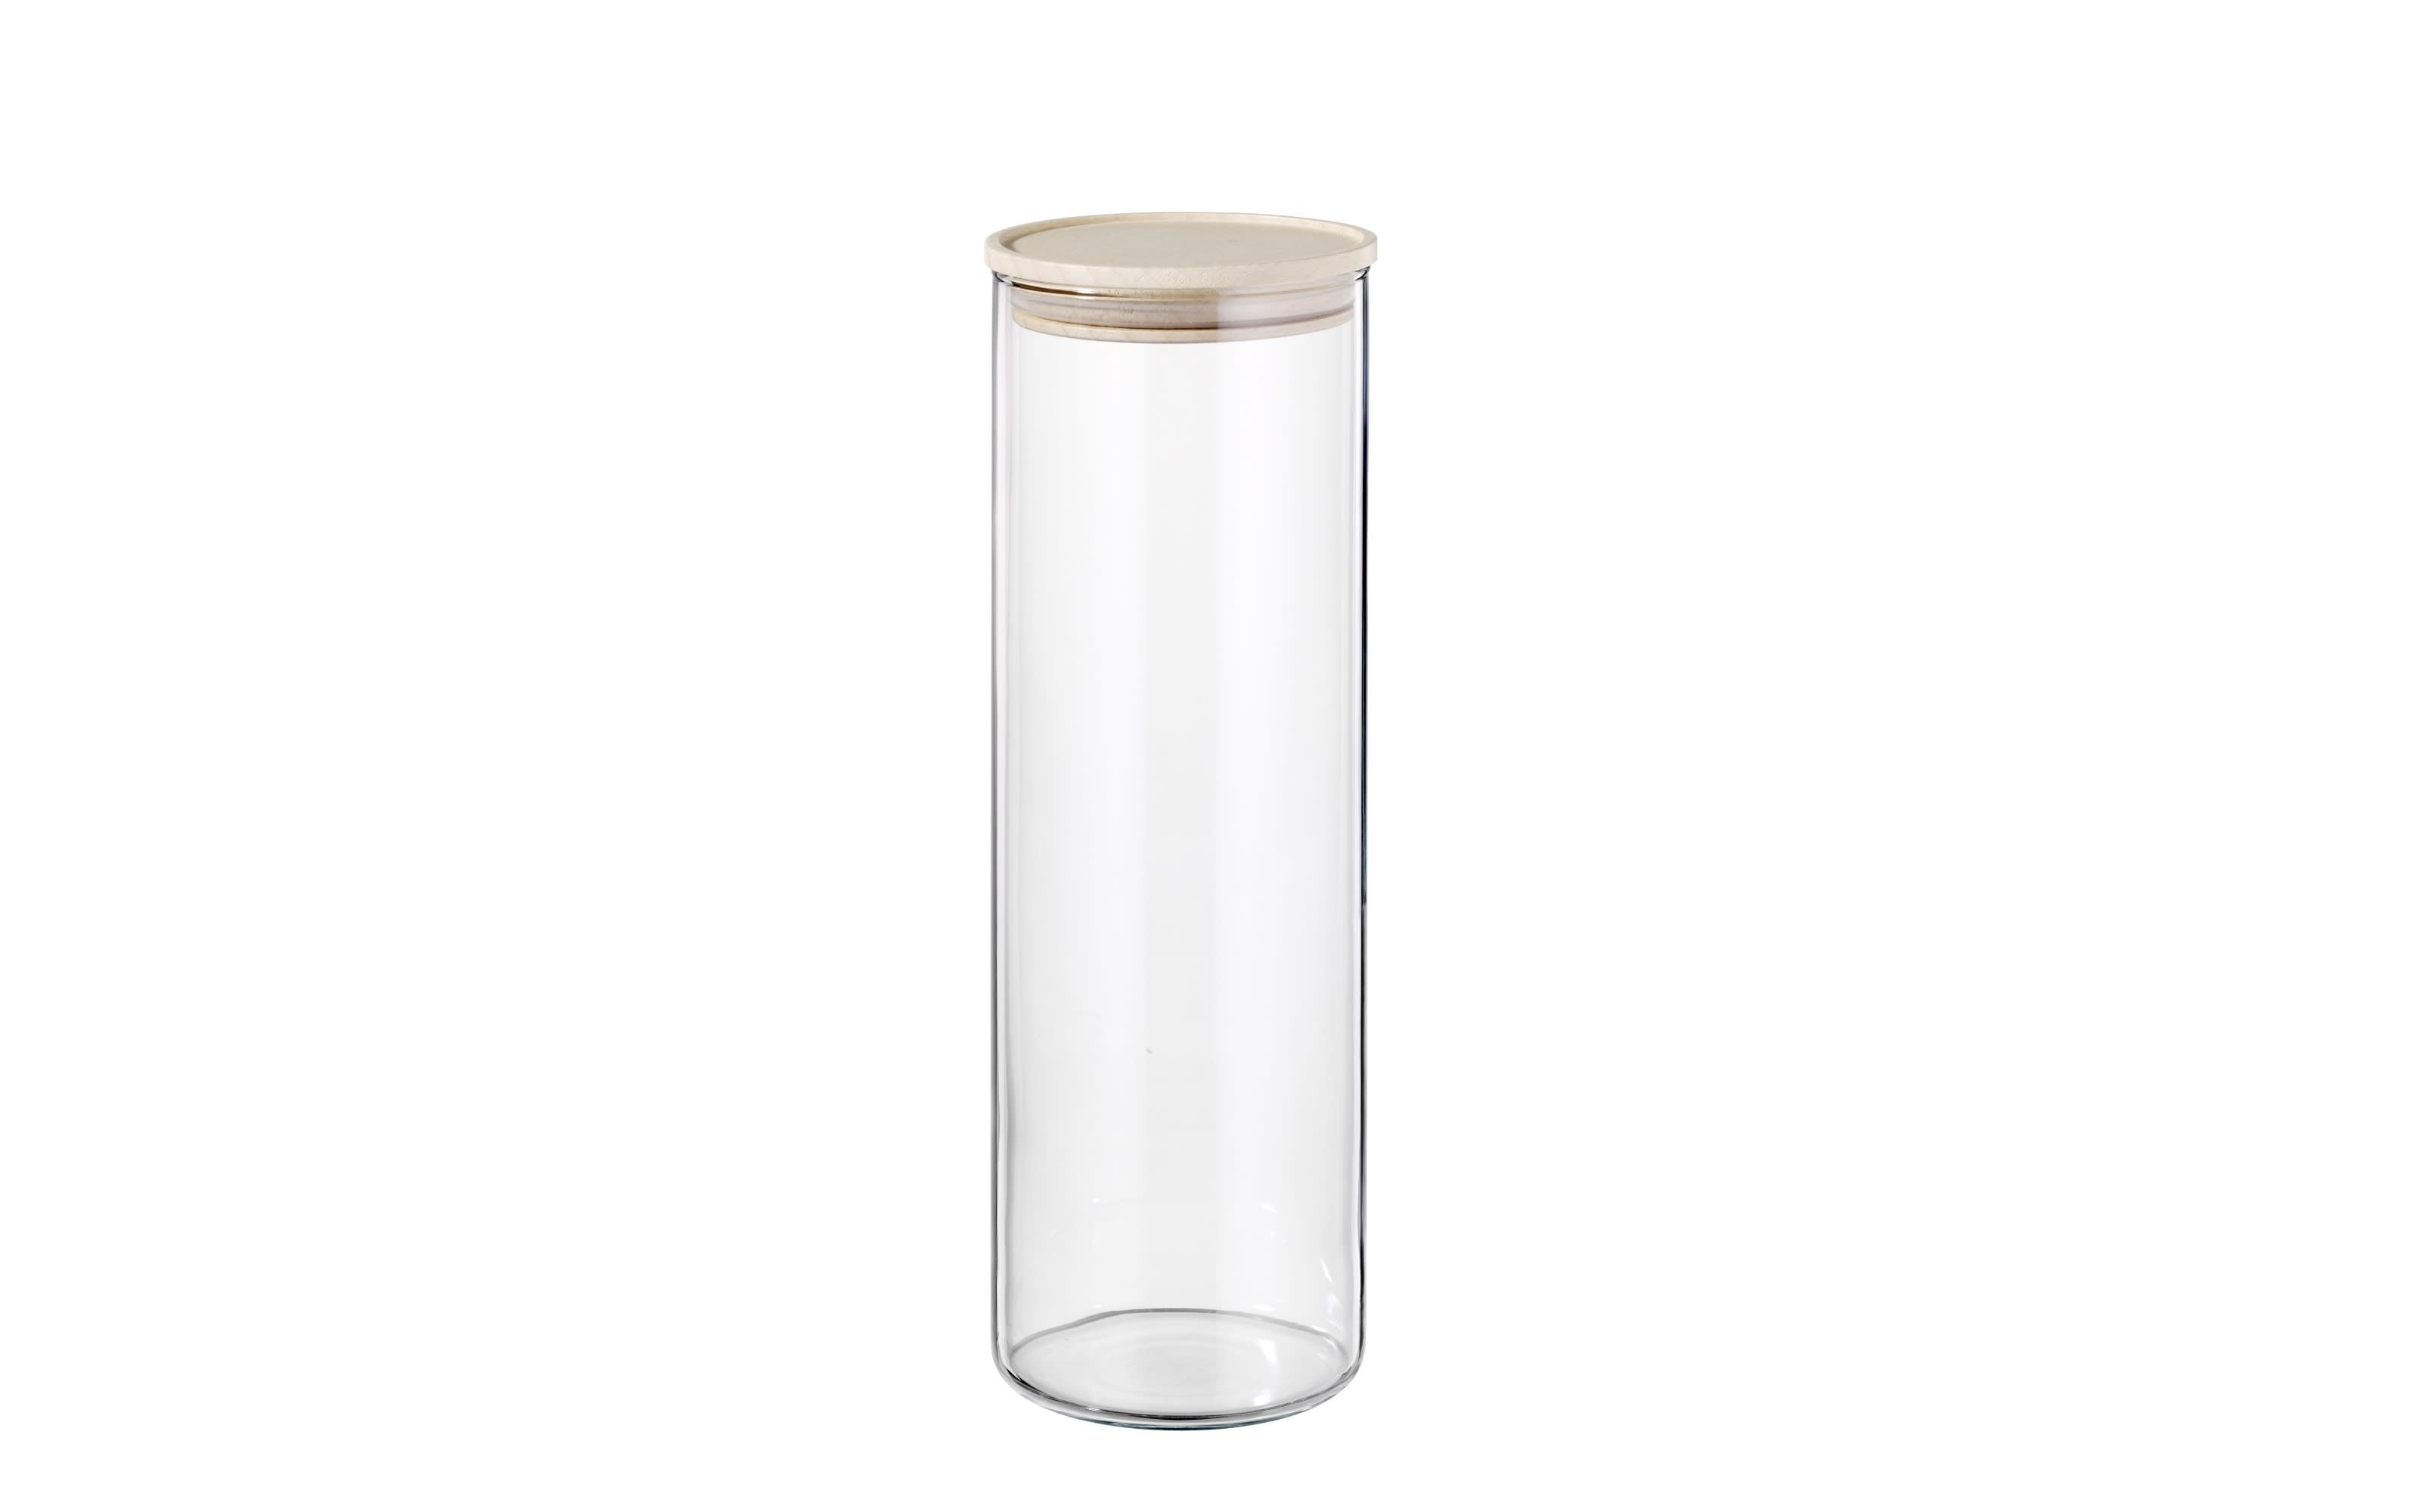 Vorratsglas mit Buchenholz-Deckel, 2 l